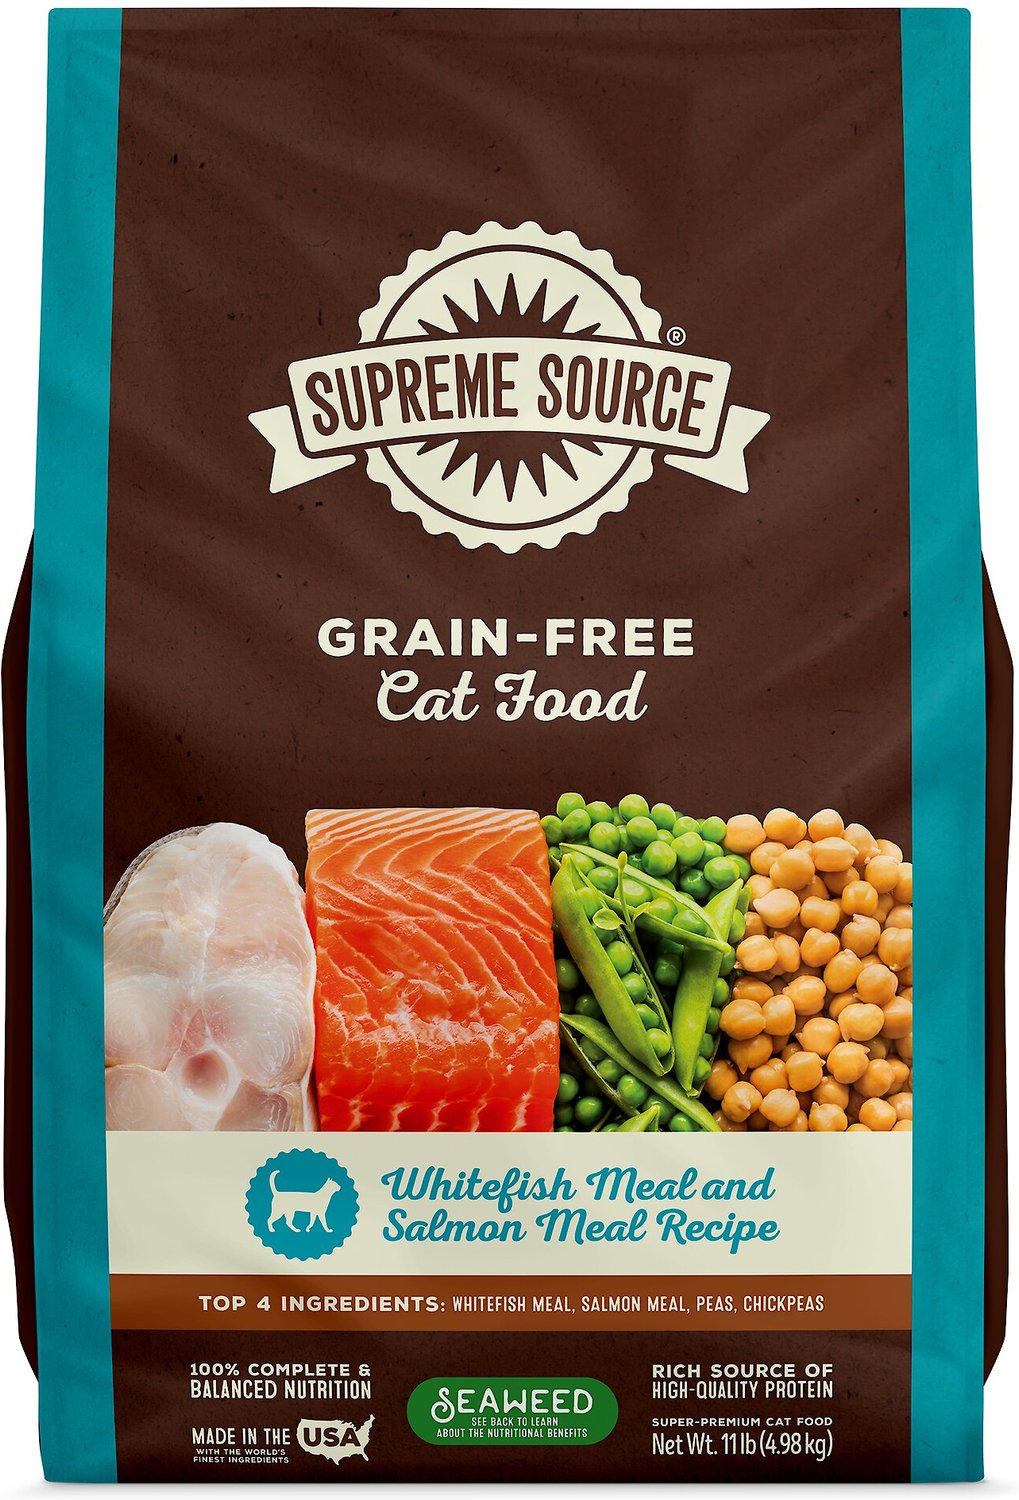 supreme source dog food review